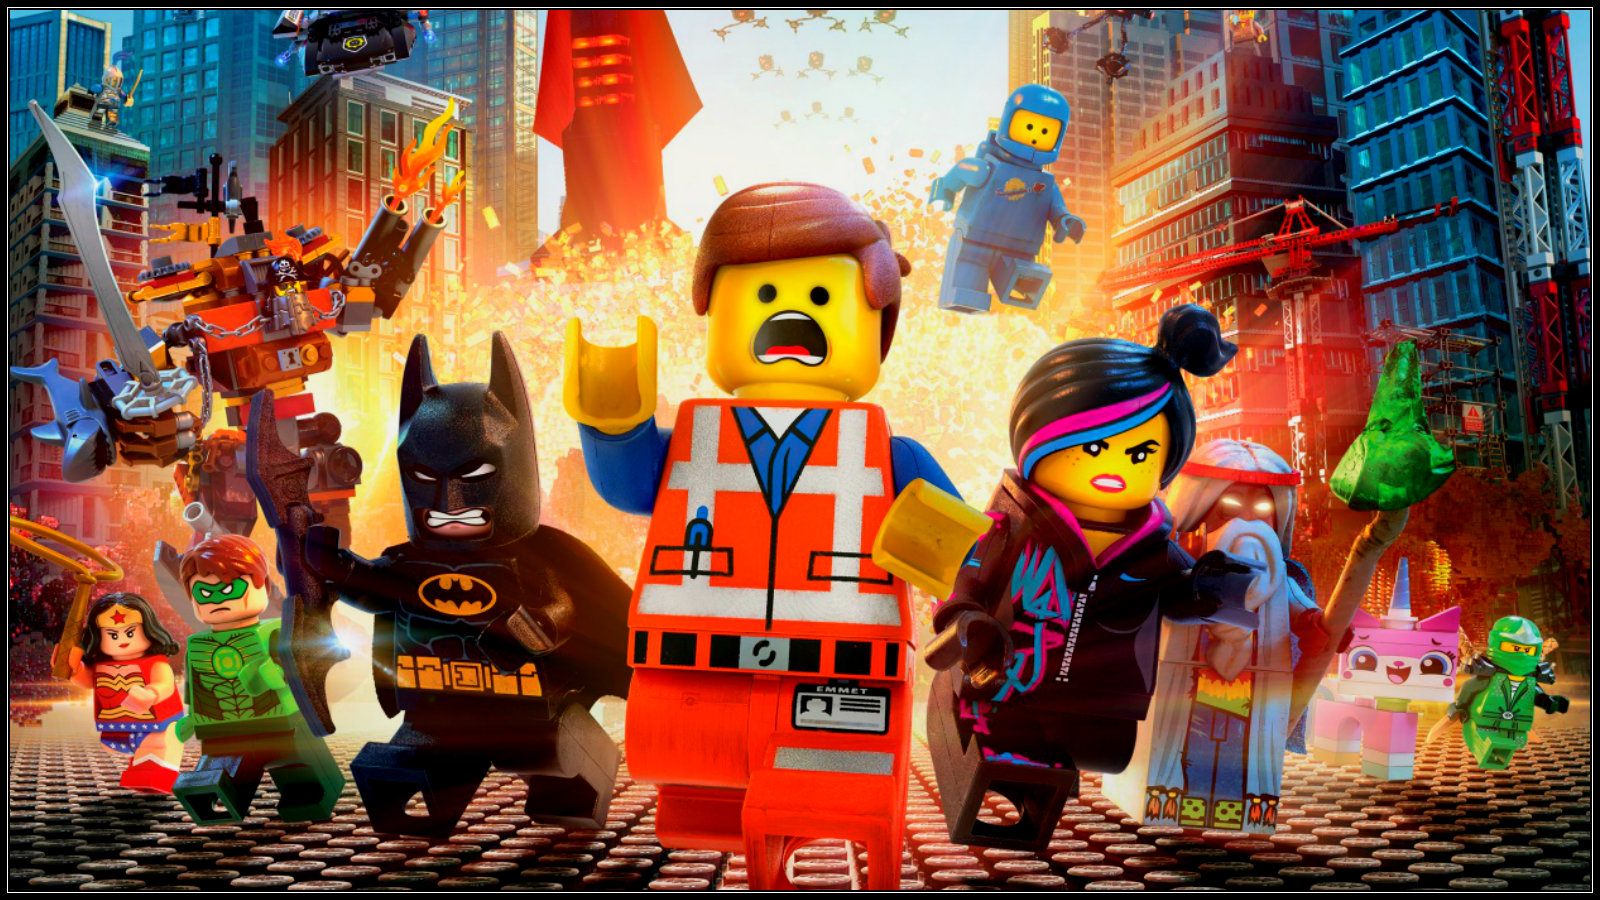 The Lego Movie 2014 - Lego hình nền (36540232) - fanpop